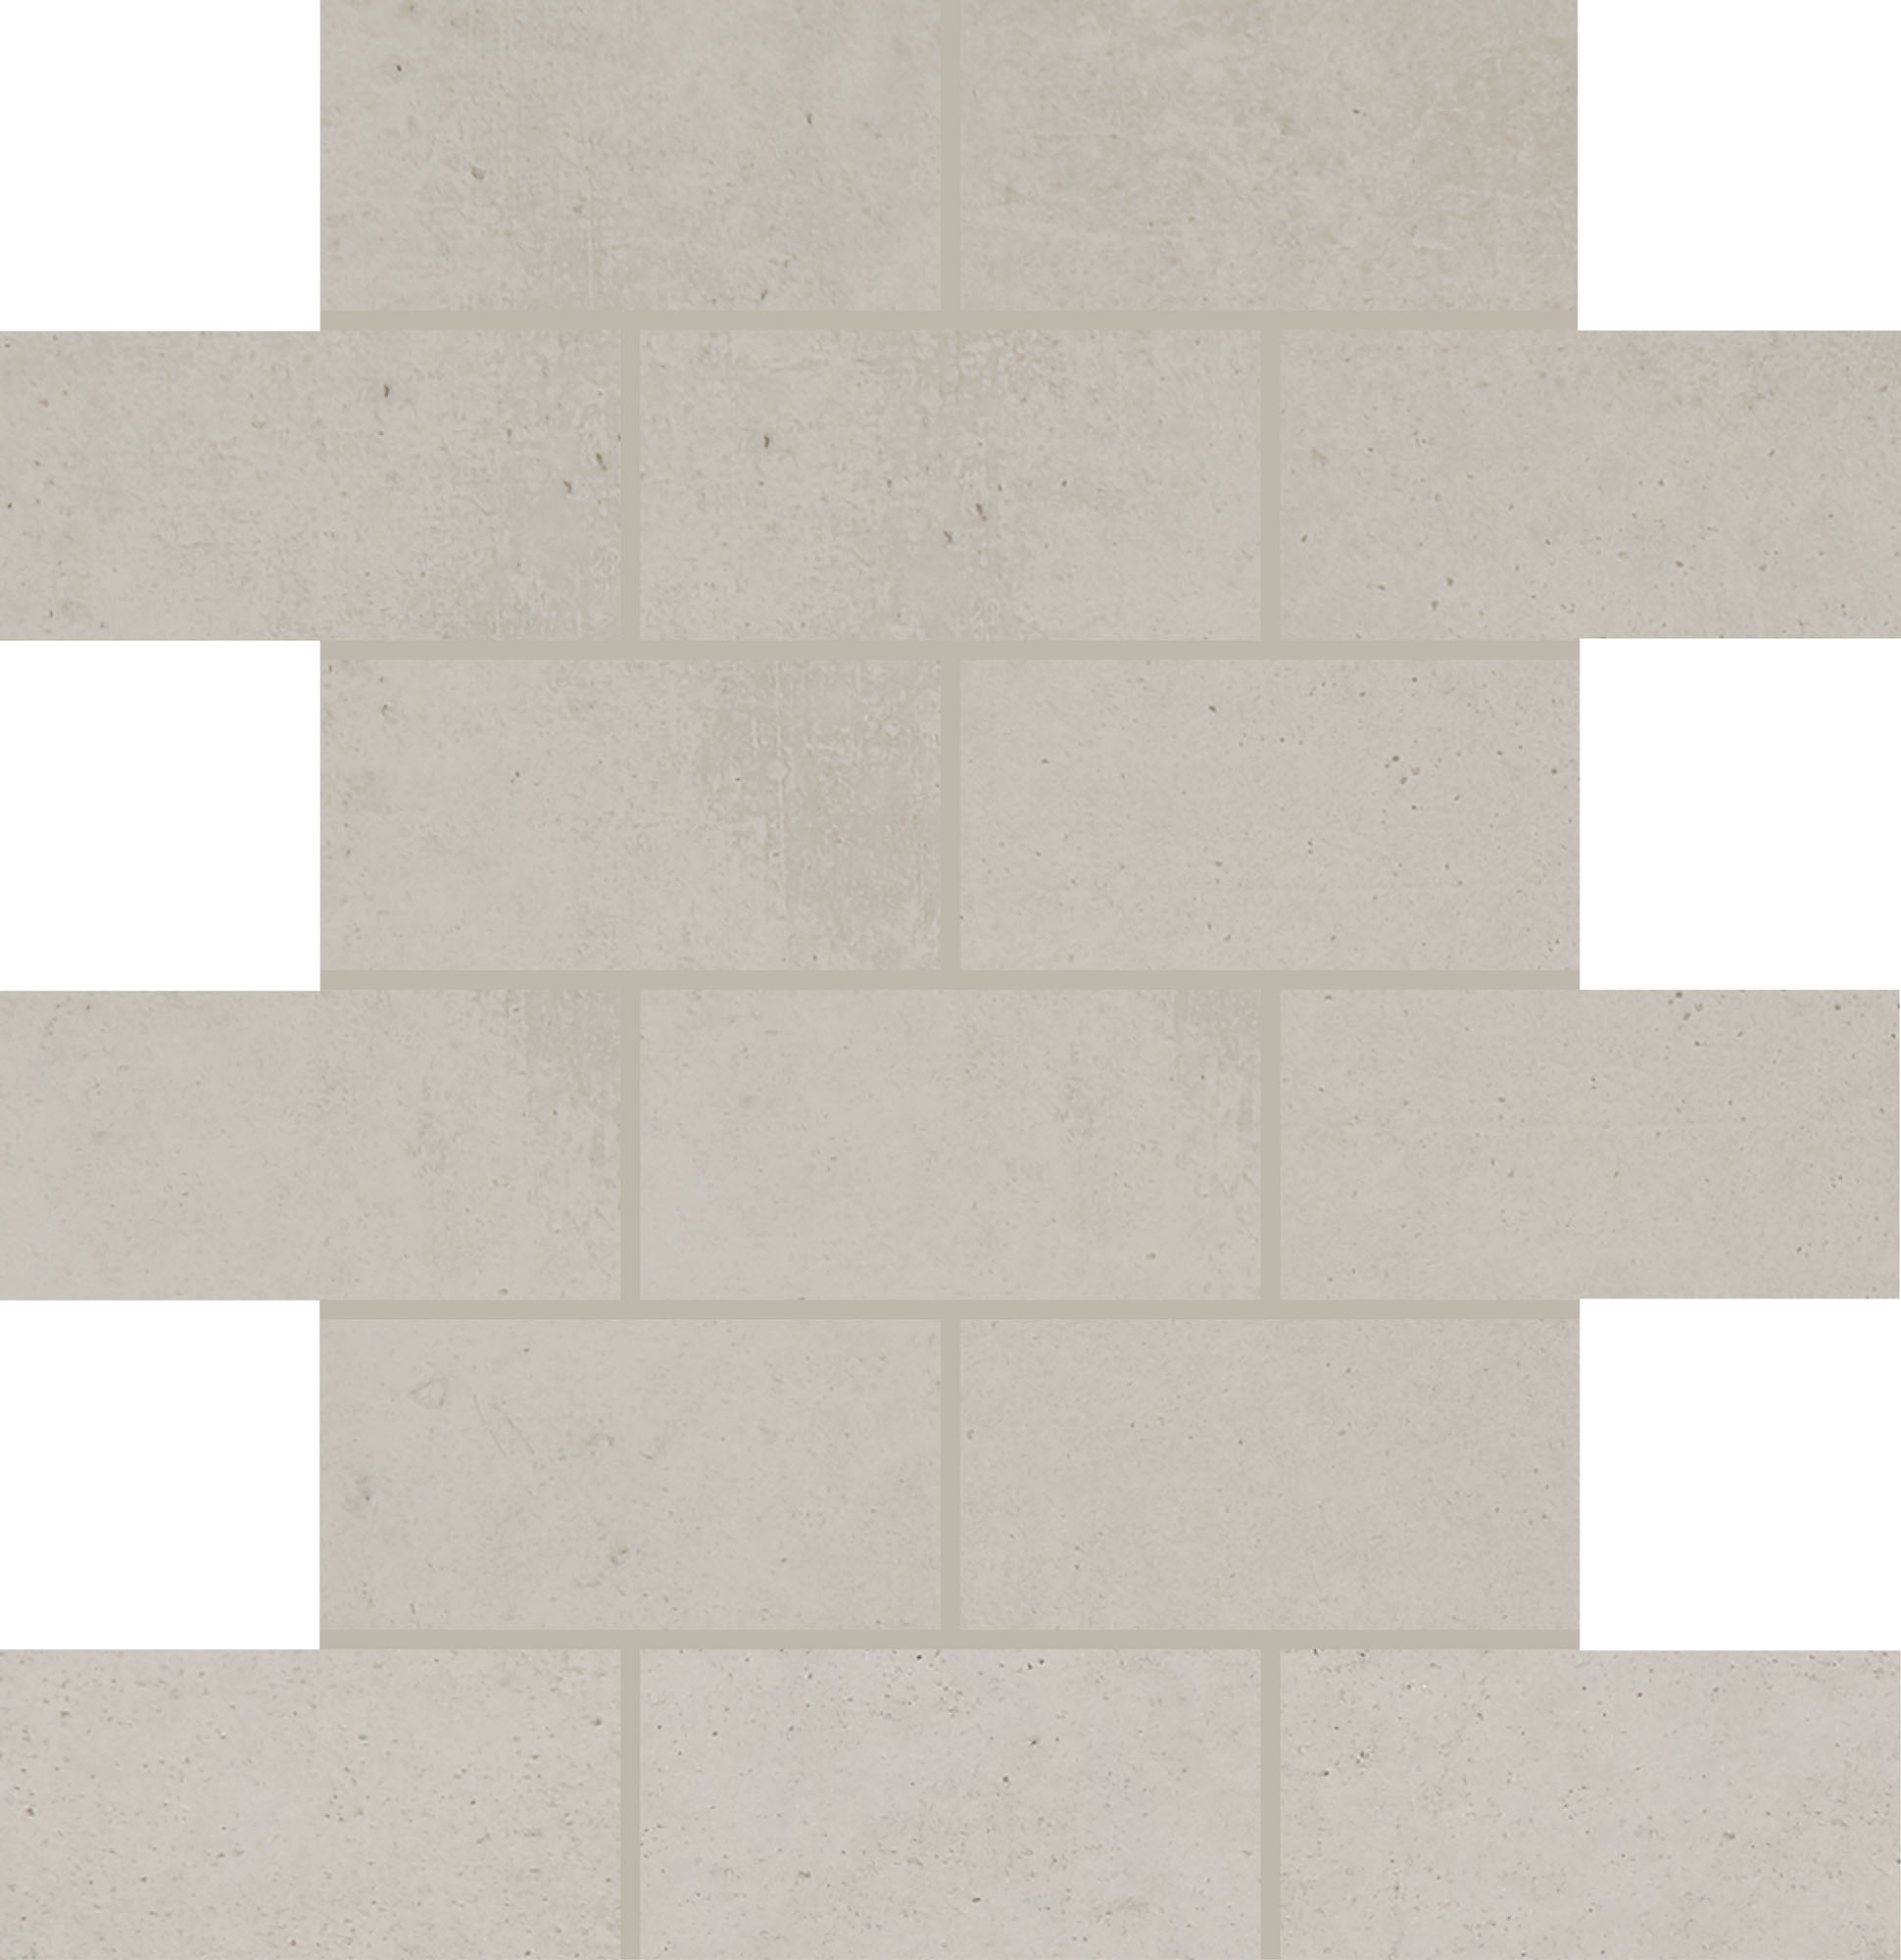 Chimney Corner, Brick Joint, 2X4, Matte